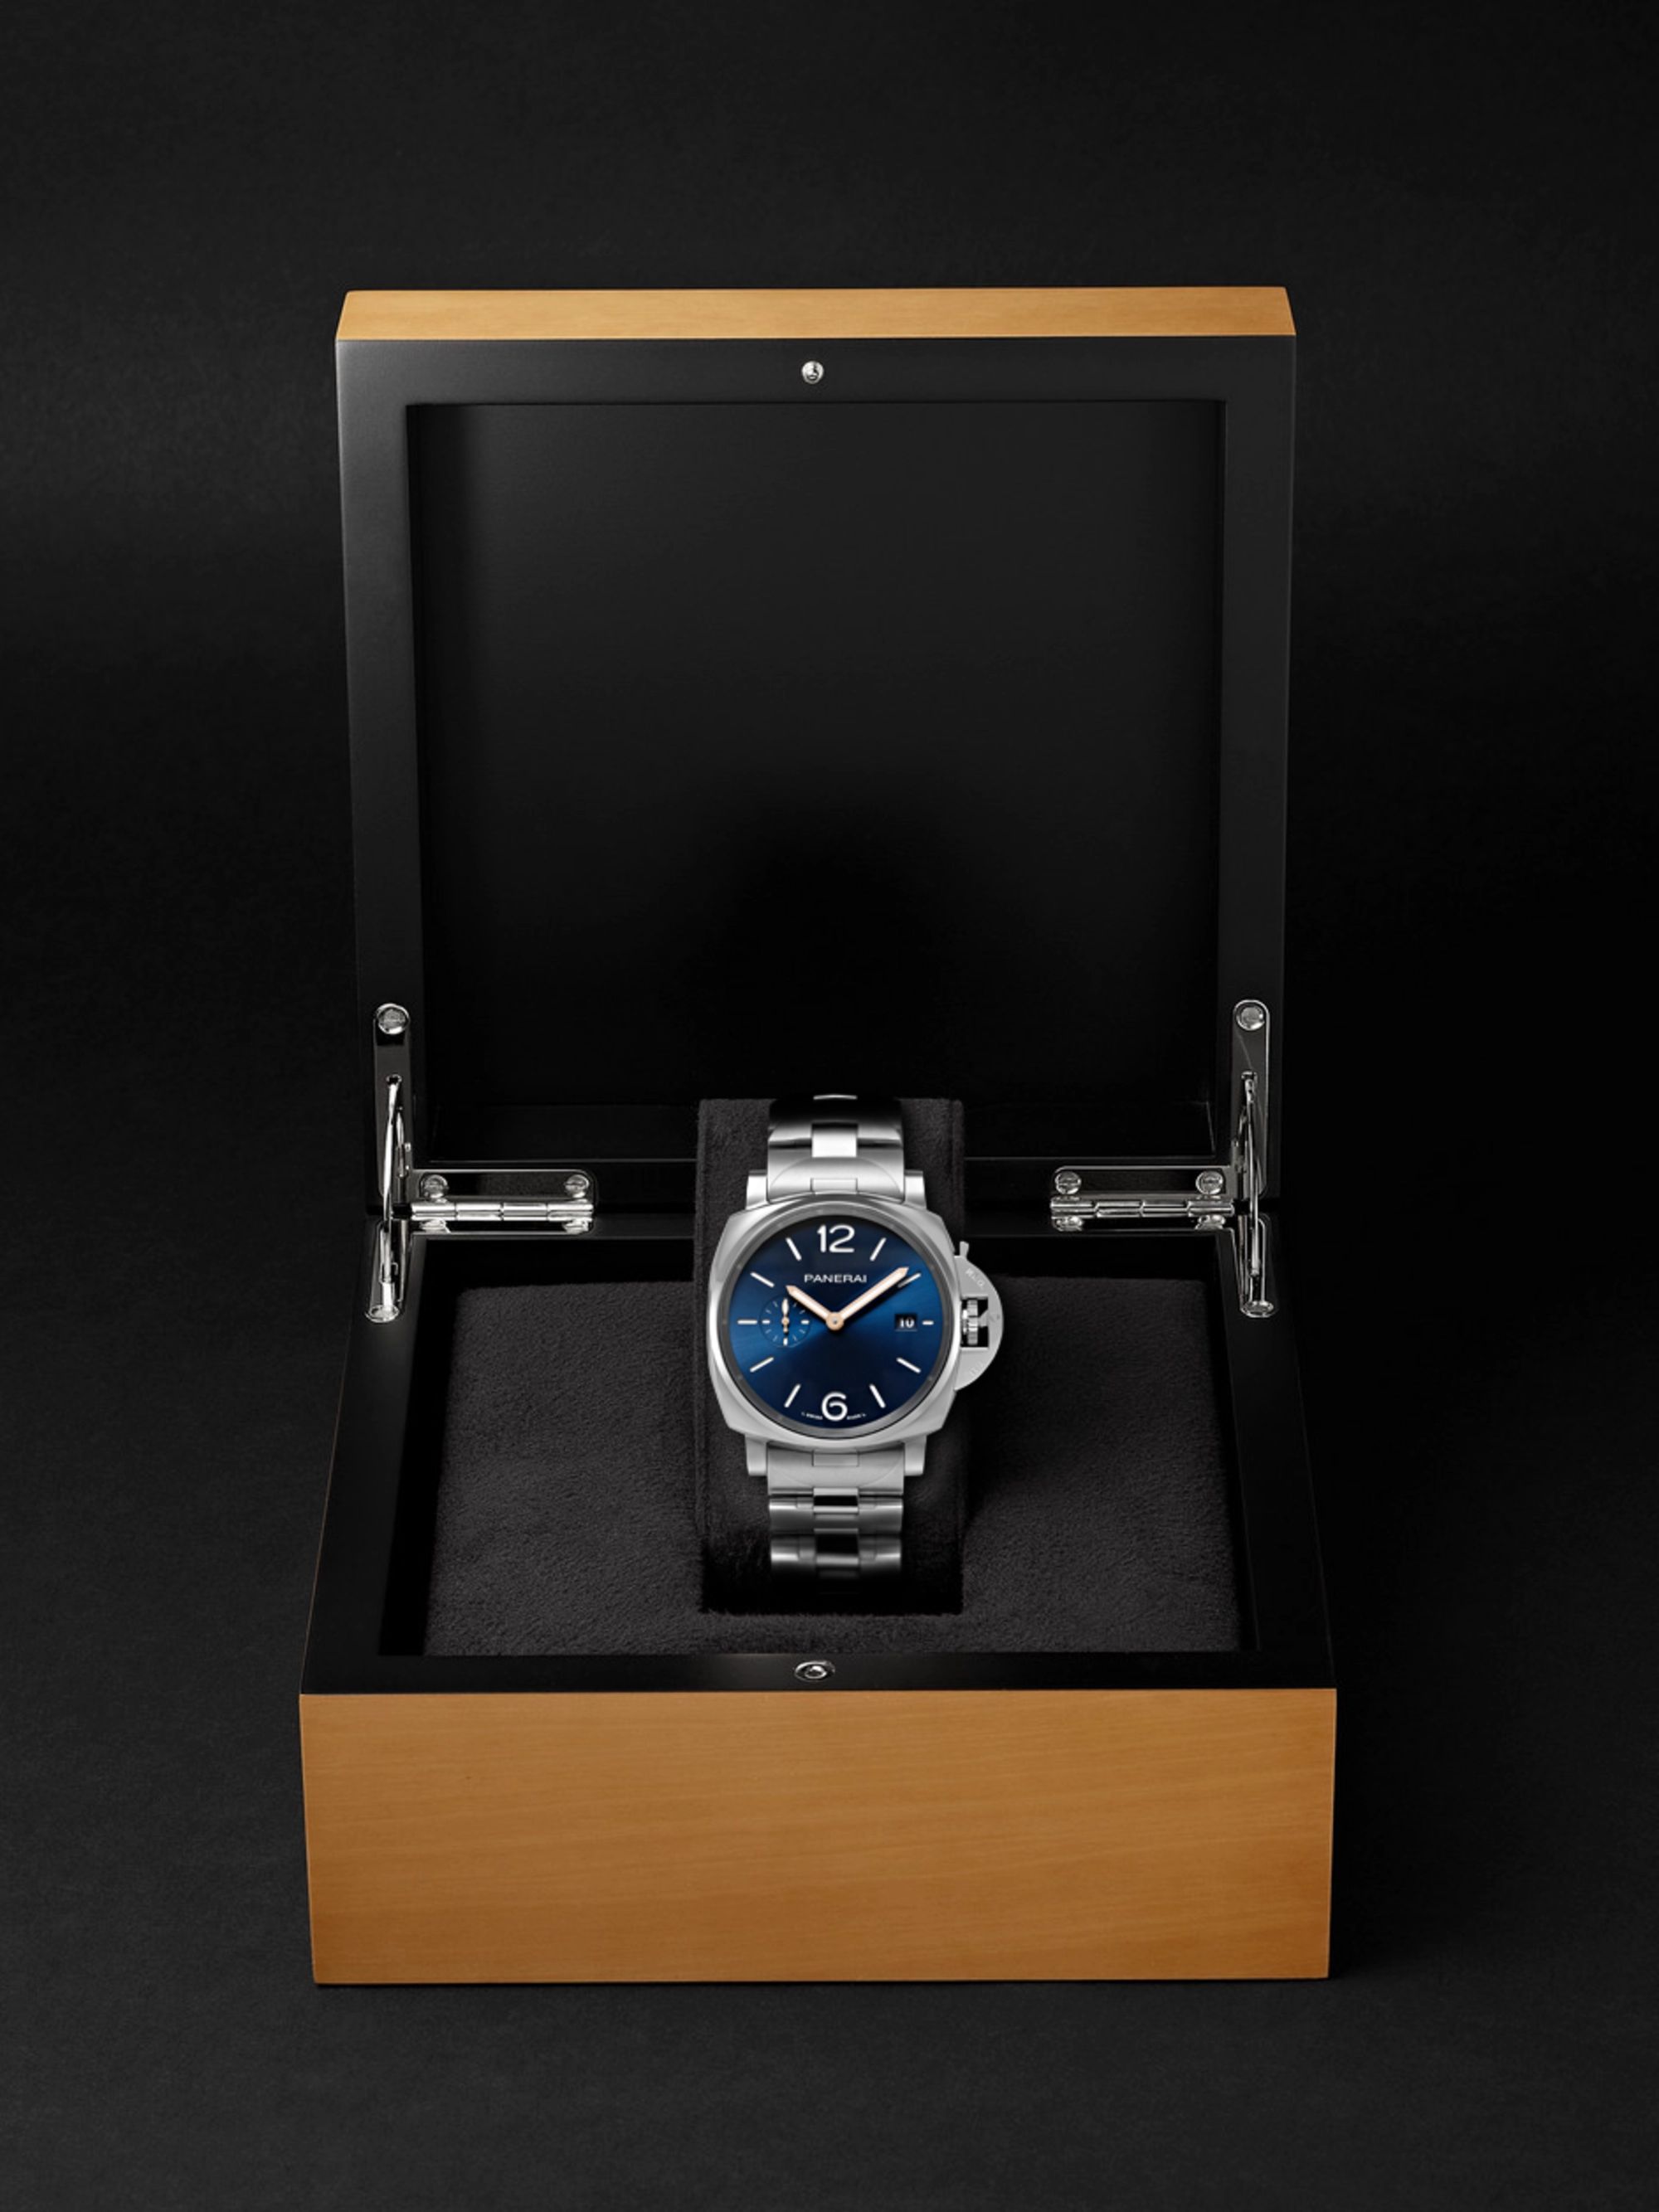 PANERAI Luminor Due Automatic 42mm Stainless Steel Watch, Ref. No. PAM01124